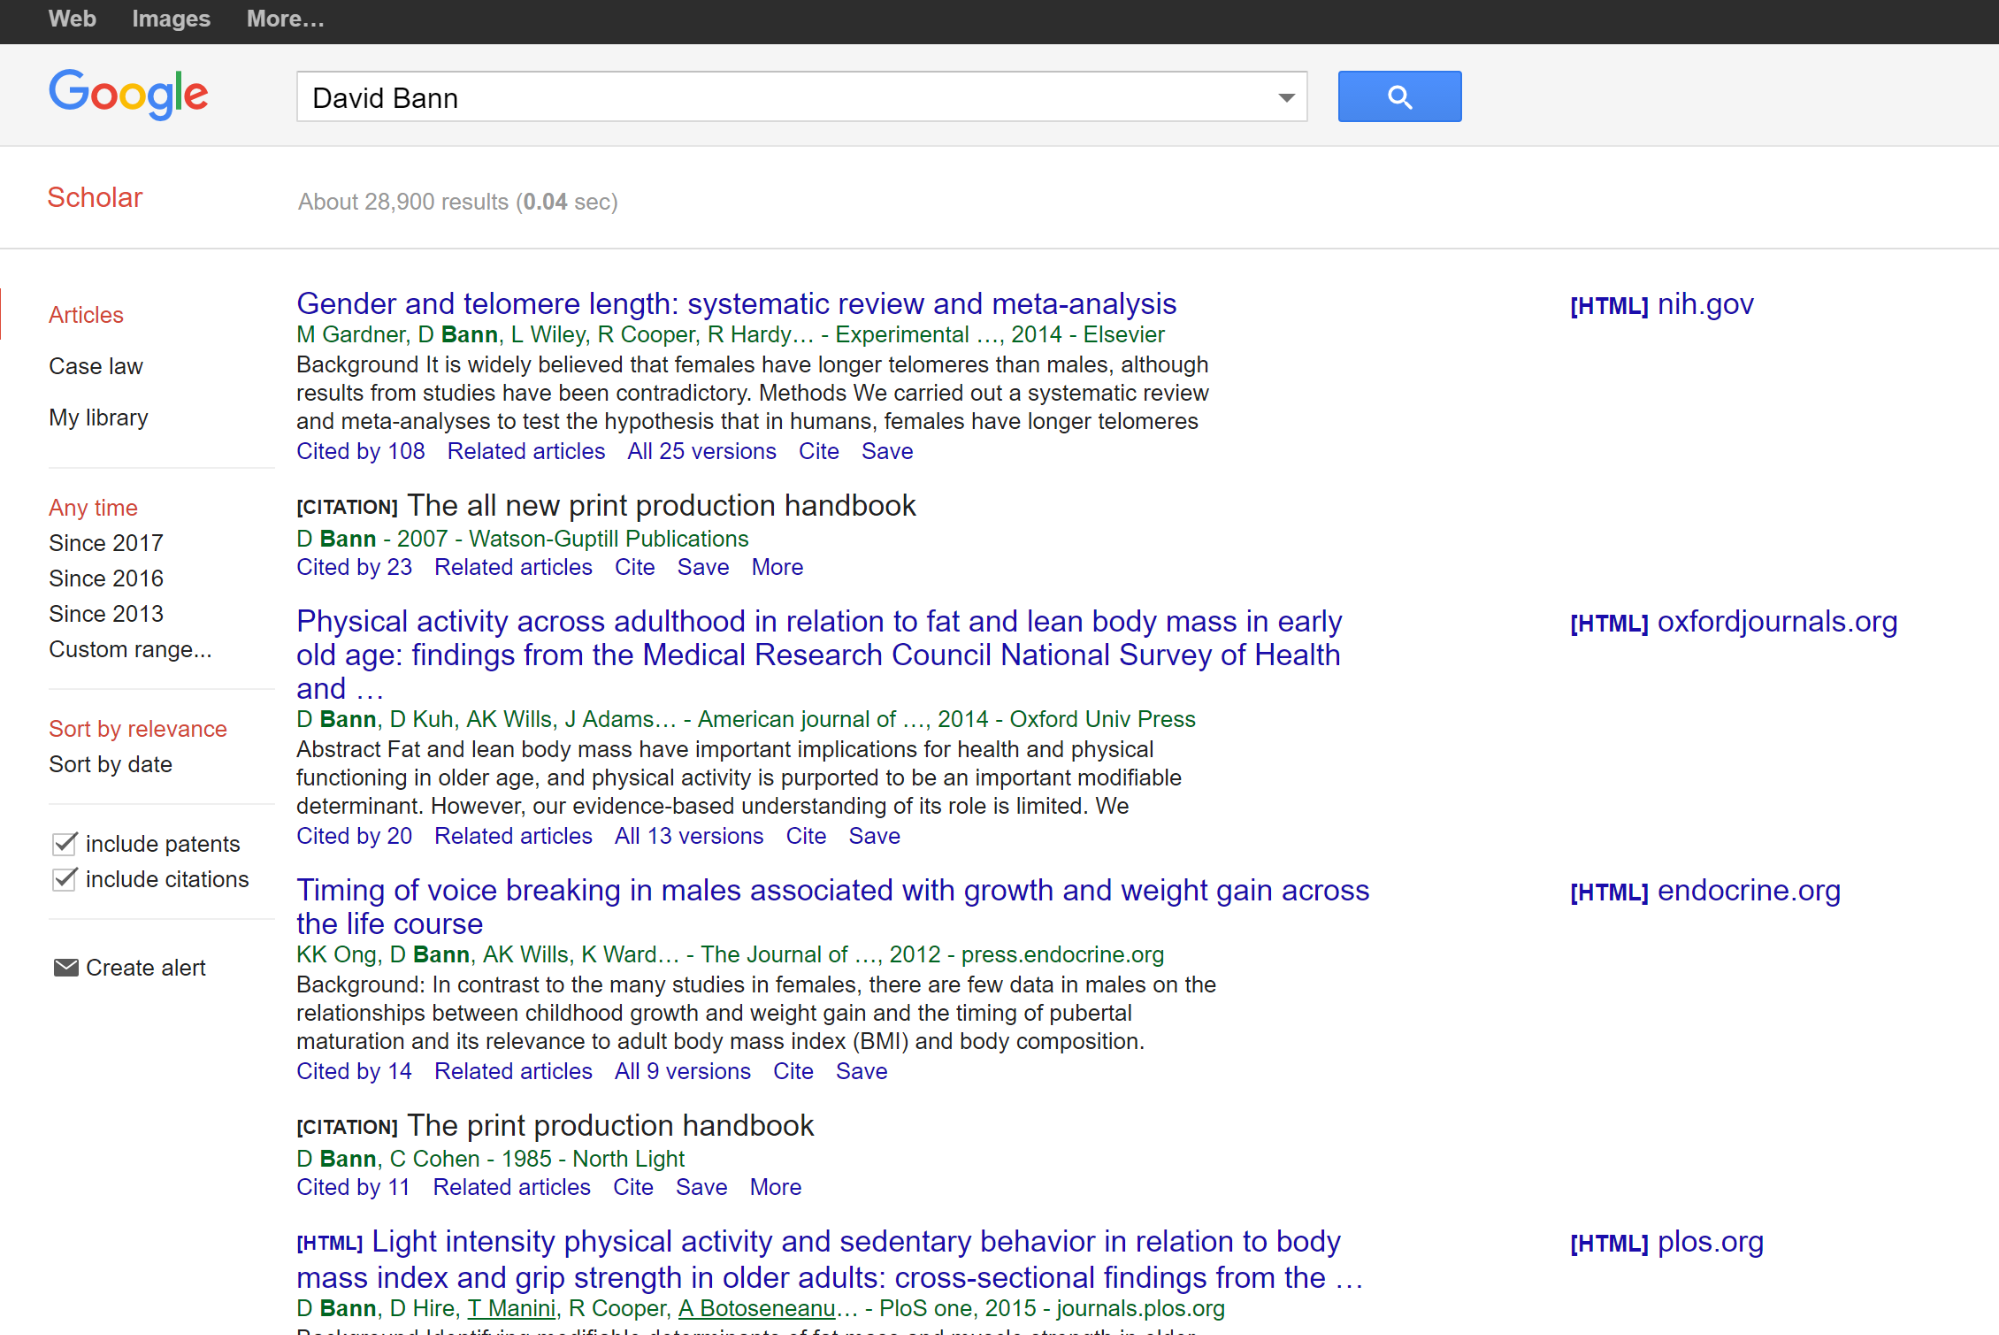 google scholar search results for david bann